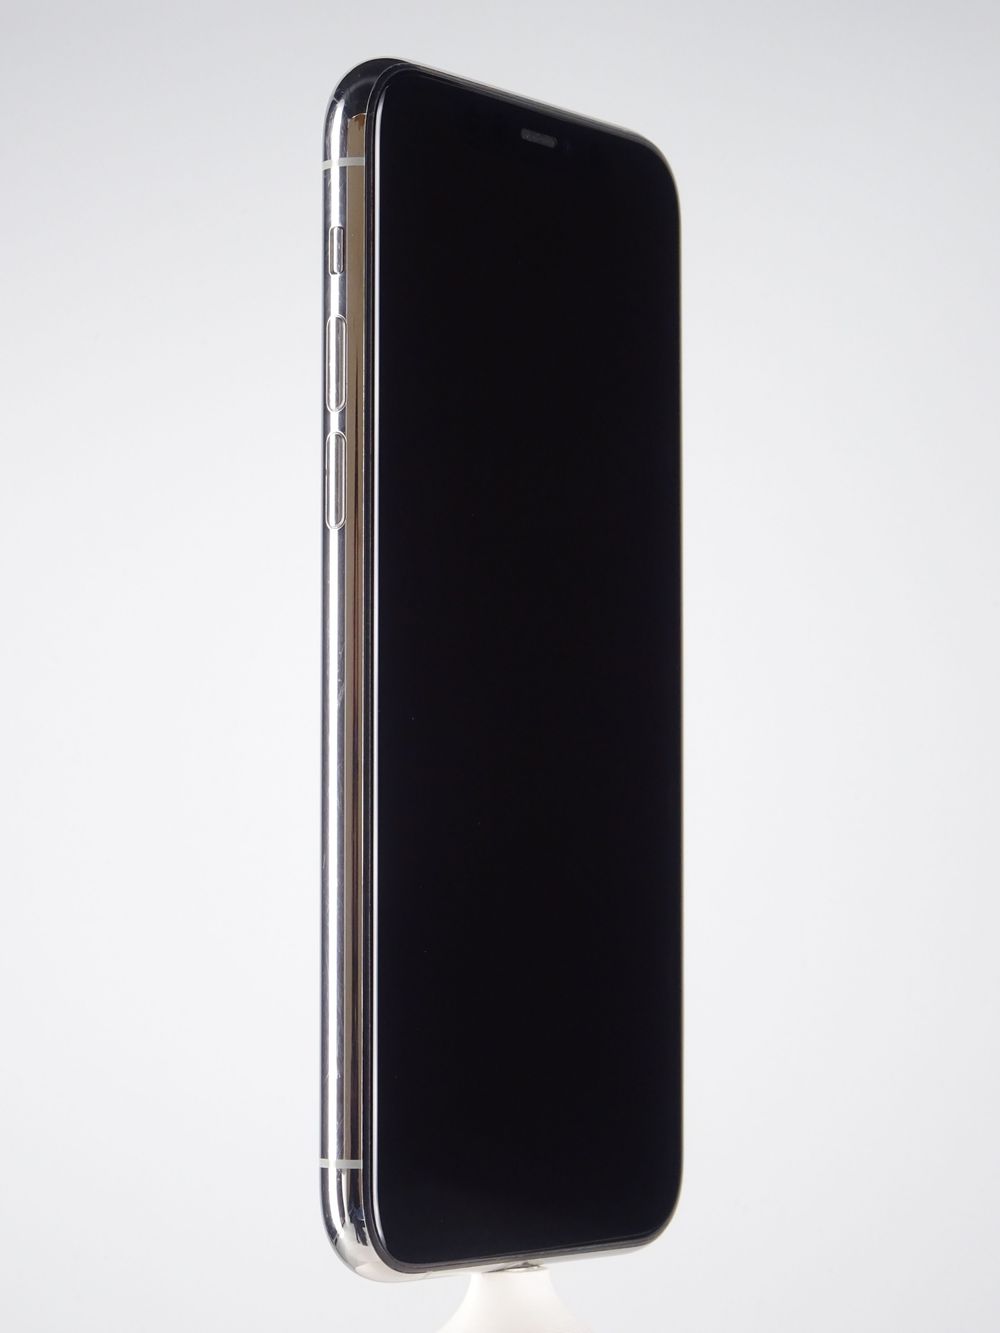 Telefon mobil Apple iPhone 11 Pro, Silver, 64 GB,  Excelent